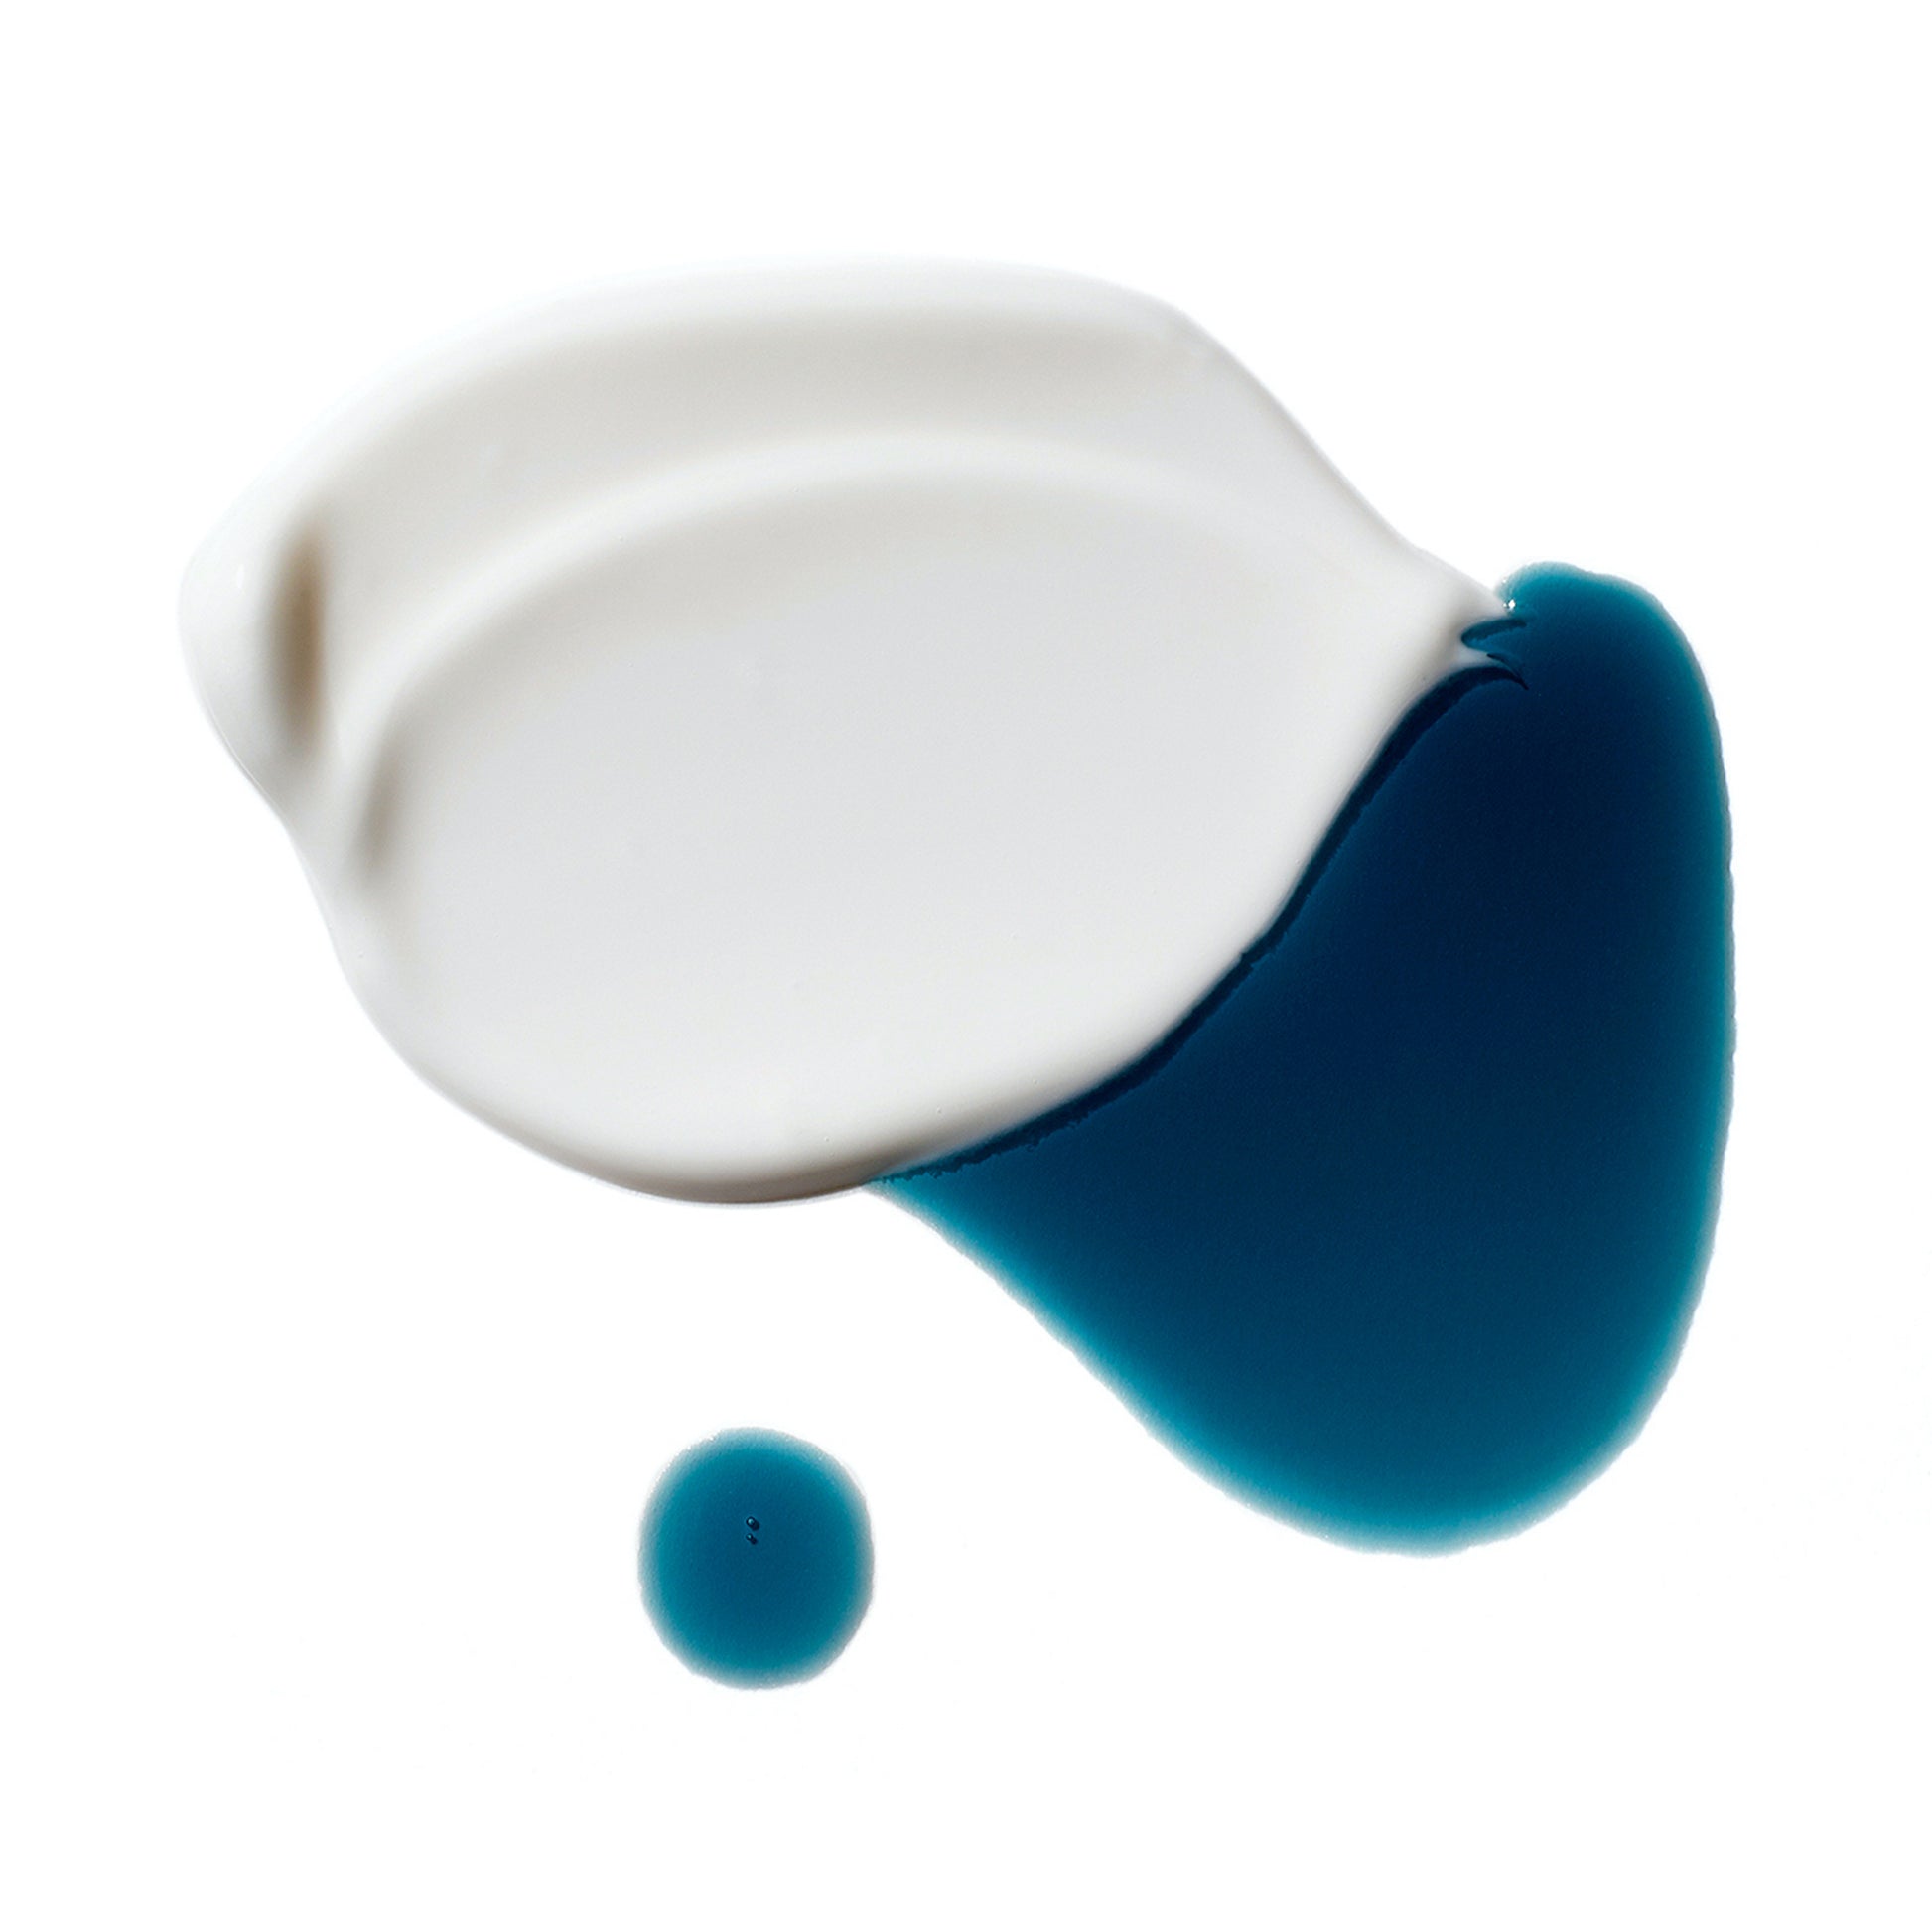 C.E.O. Serum white goop touching the dark blue oil drop on a white background